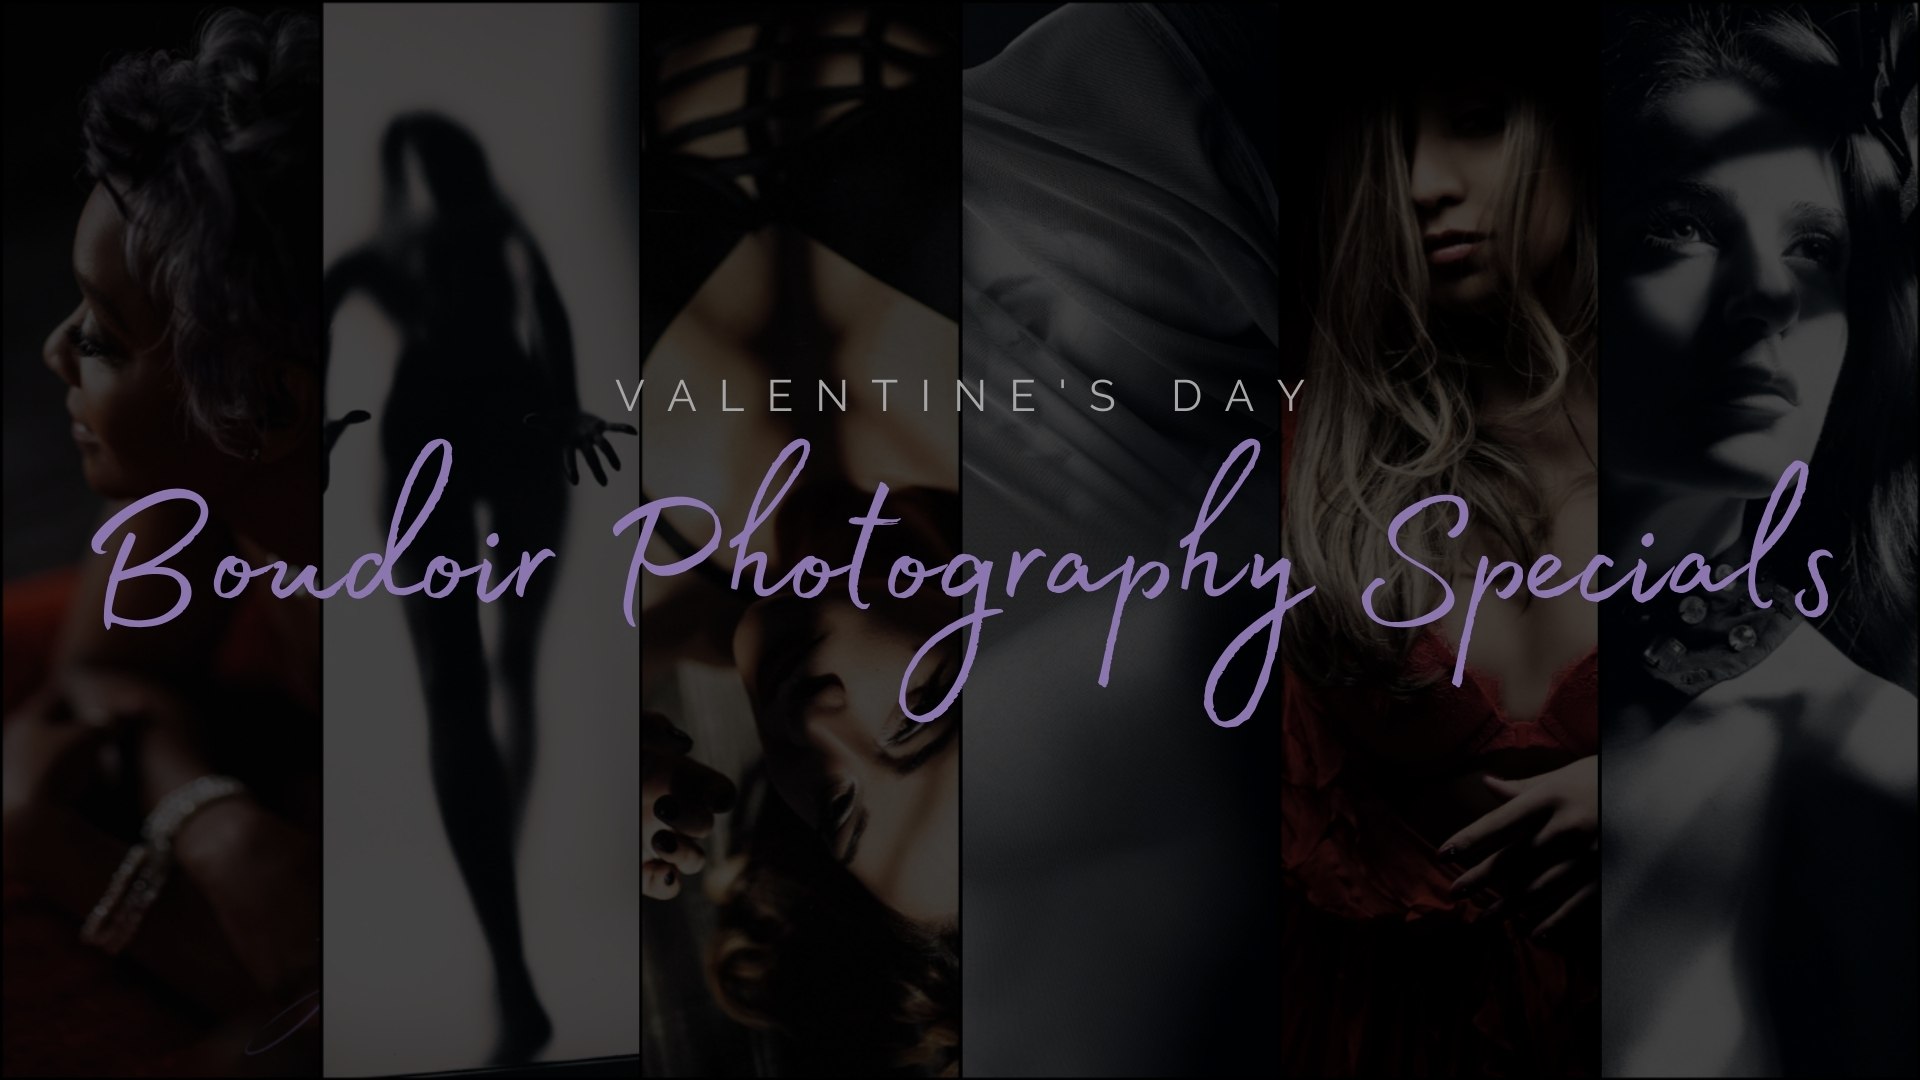 Valentine's Day Boudoir Photography Specials by Zorz Studios